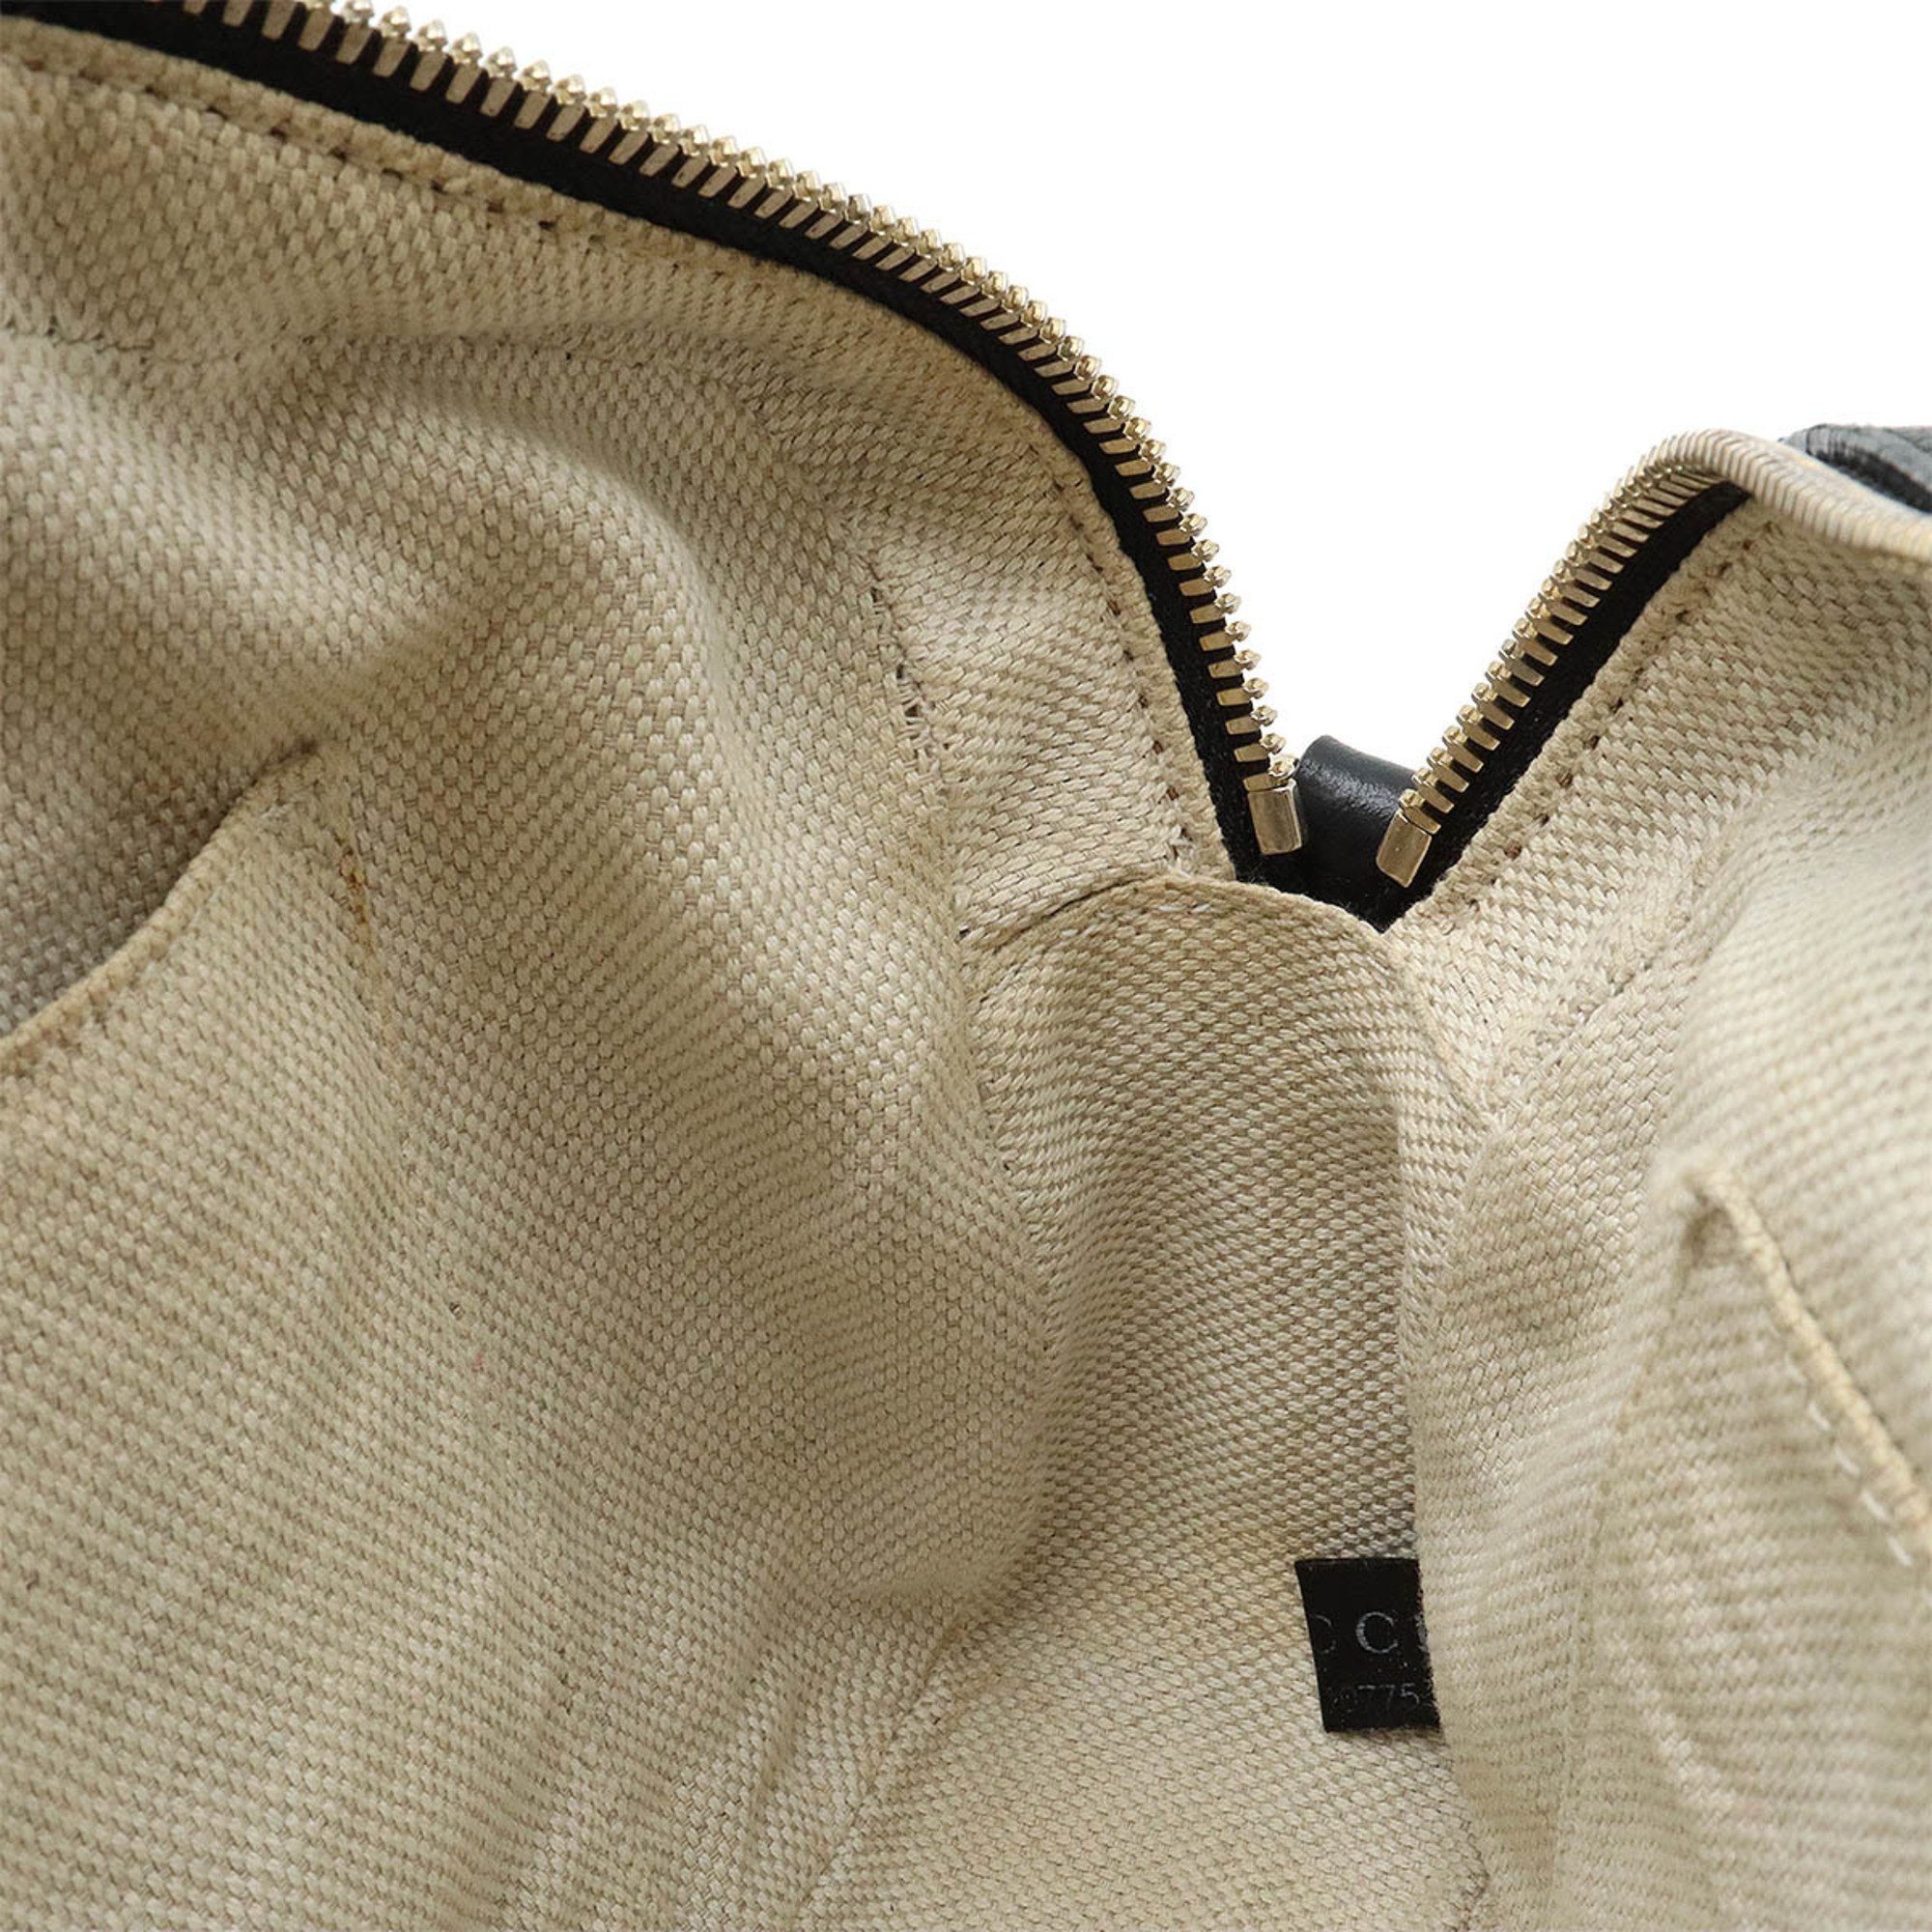 GUCCI Soho Small Disco Tassel Shoulder Bag Pochette Leather Black 308364